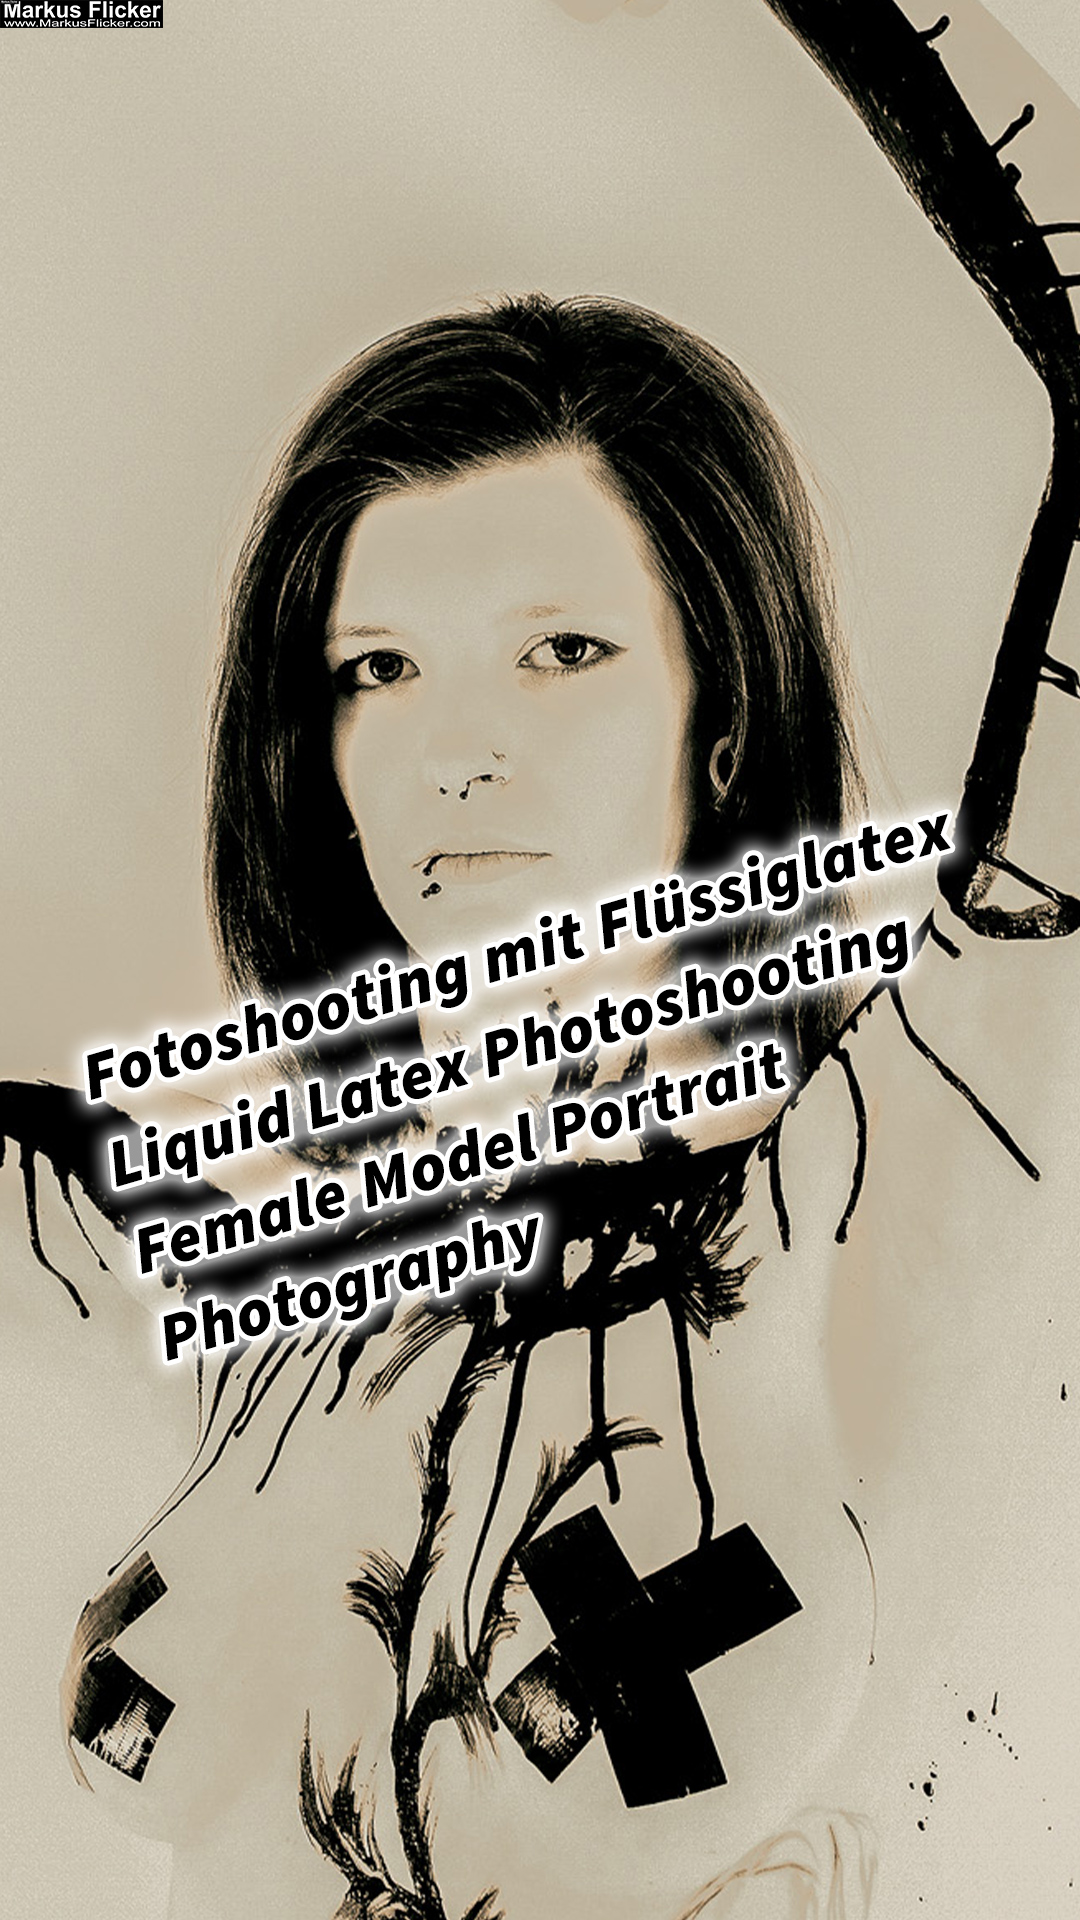 Fotoshooting mit Flüssiglatex Liquid Latex Photoshooting Female Model Portrait Photography